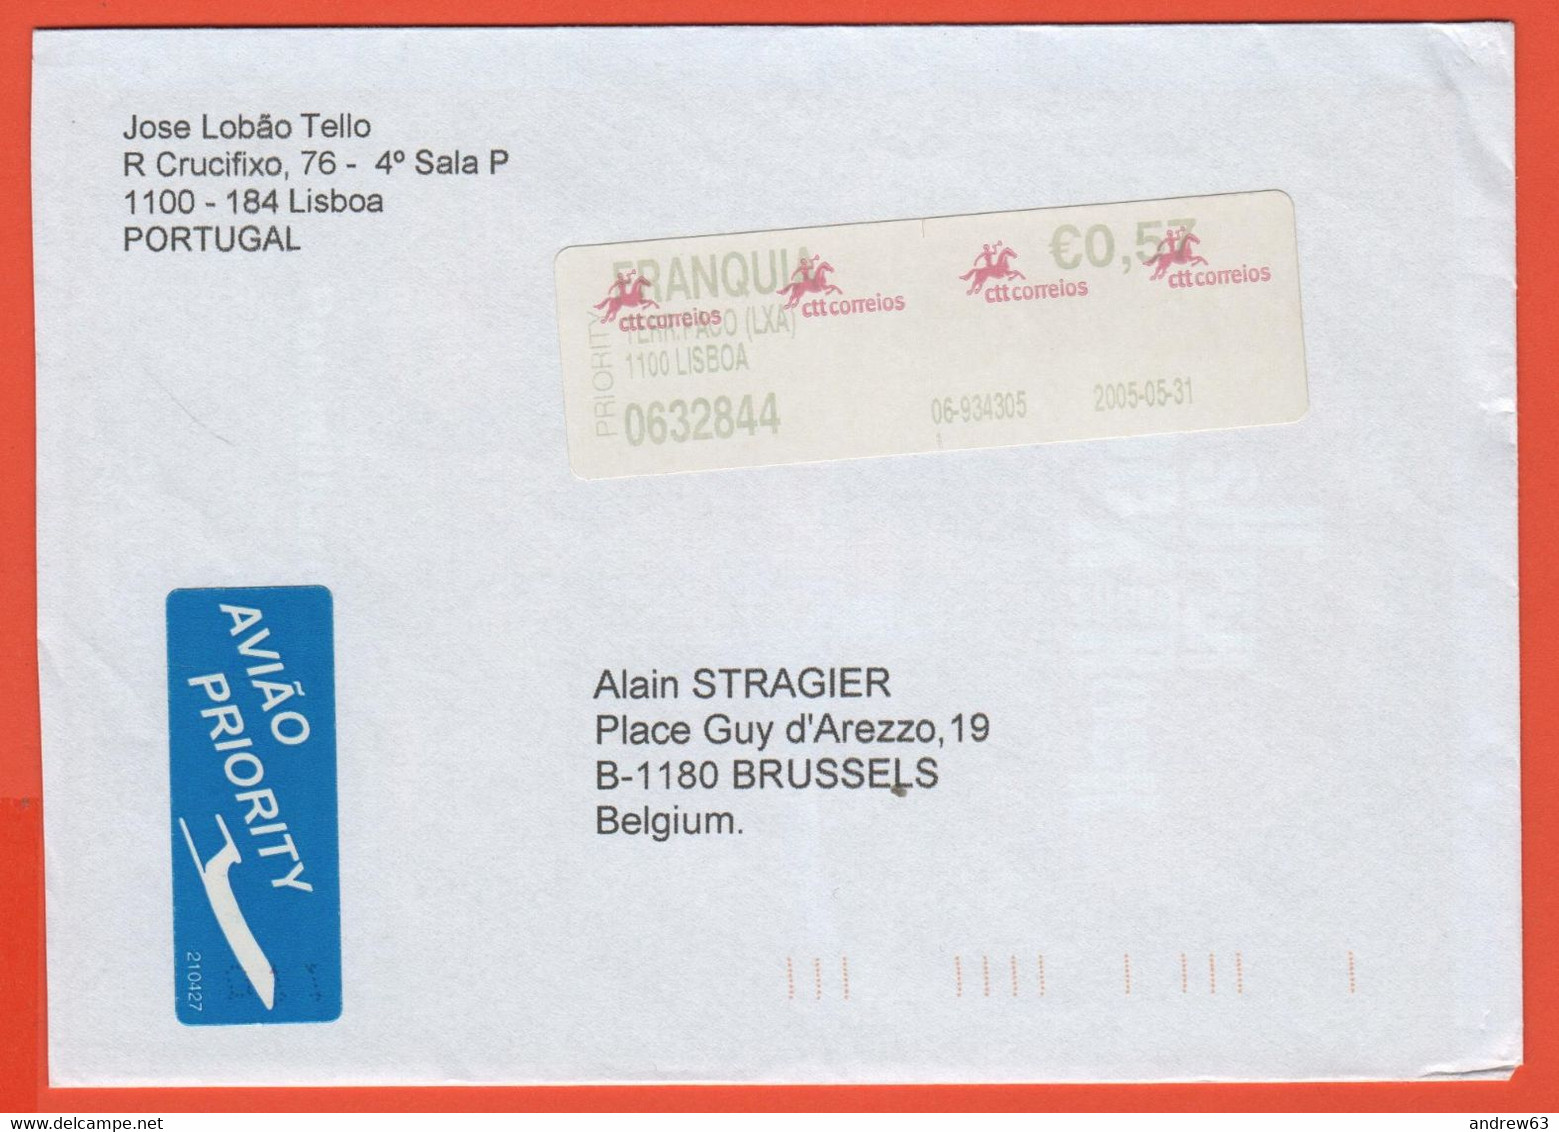 PORTOGALLO - PORTUGAL - 2005 - 0,57€ Postage Paid - Viaggiata Da Lisboa Per Bruxelles, Belgium - Cartas & Documentos